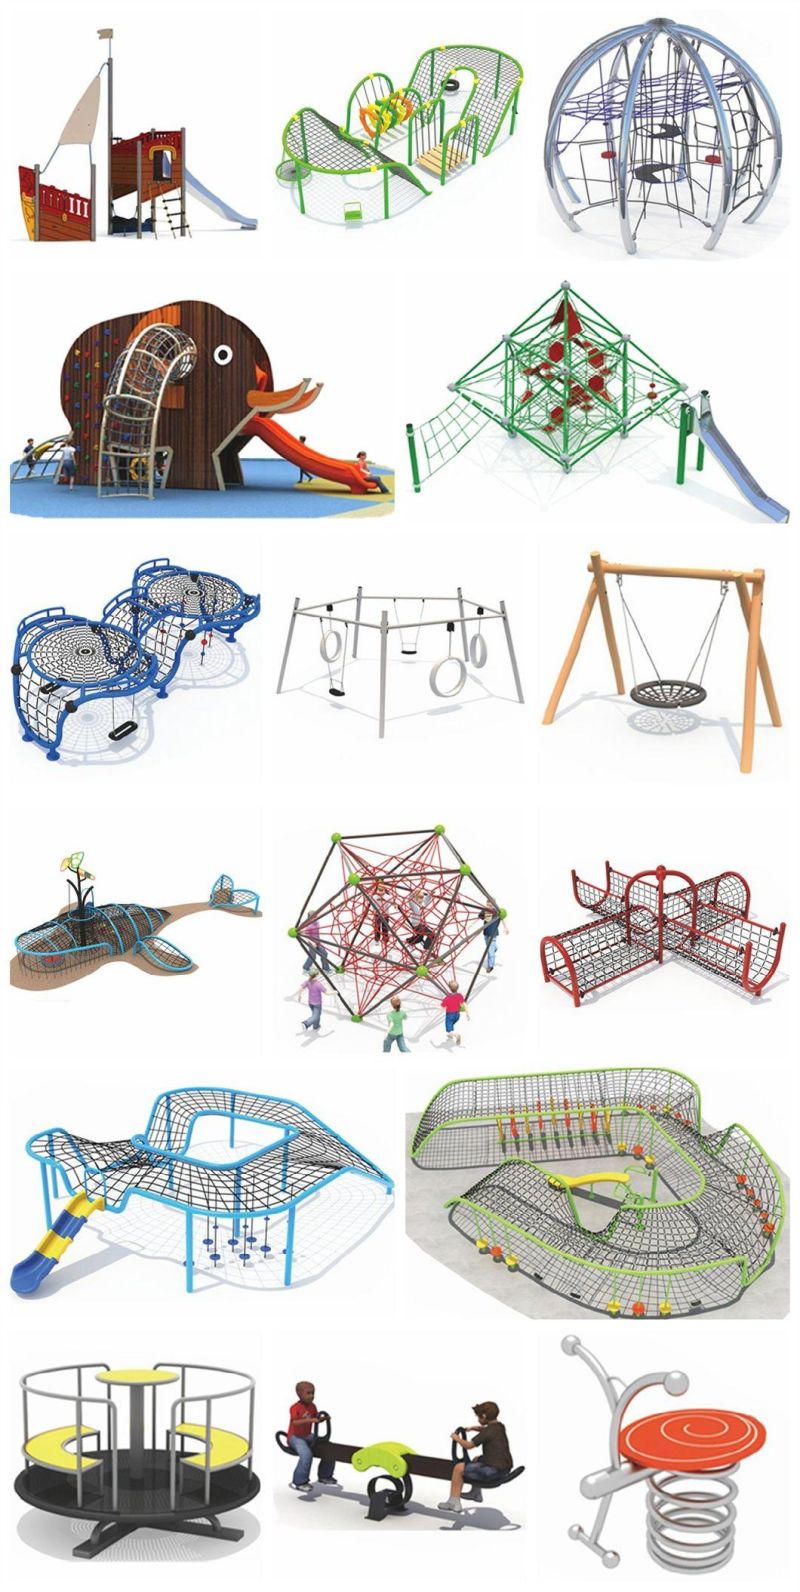 Customized Park Outdoor Climbing Net Slide Set Children Playground Equipment